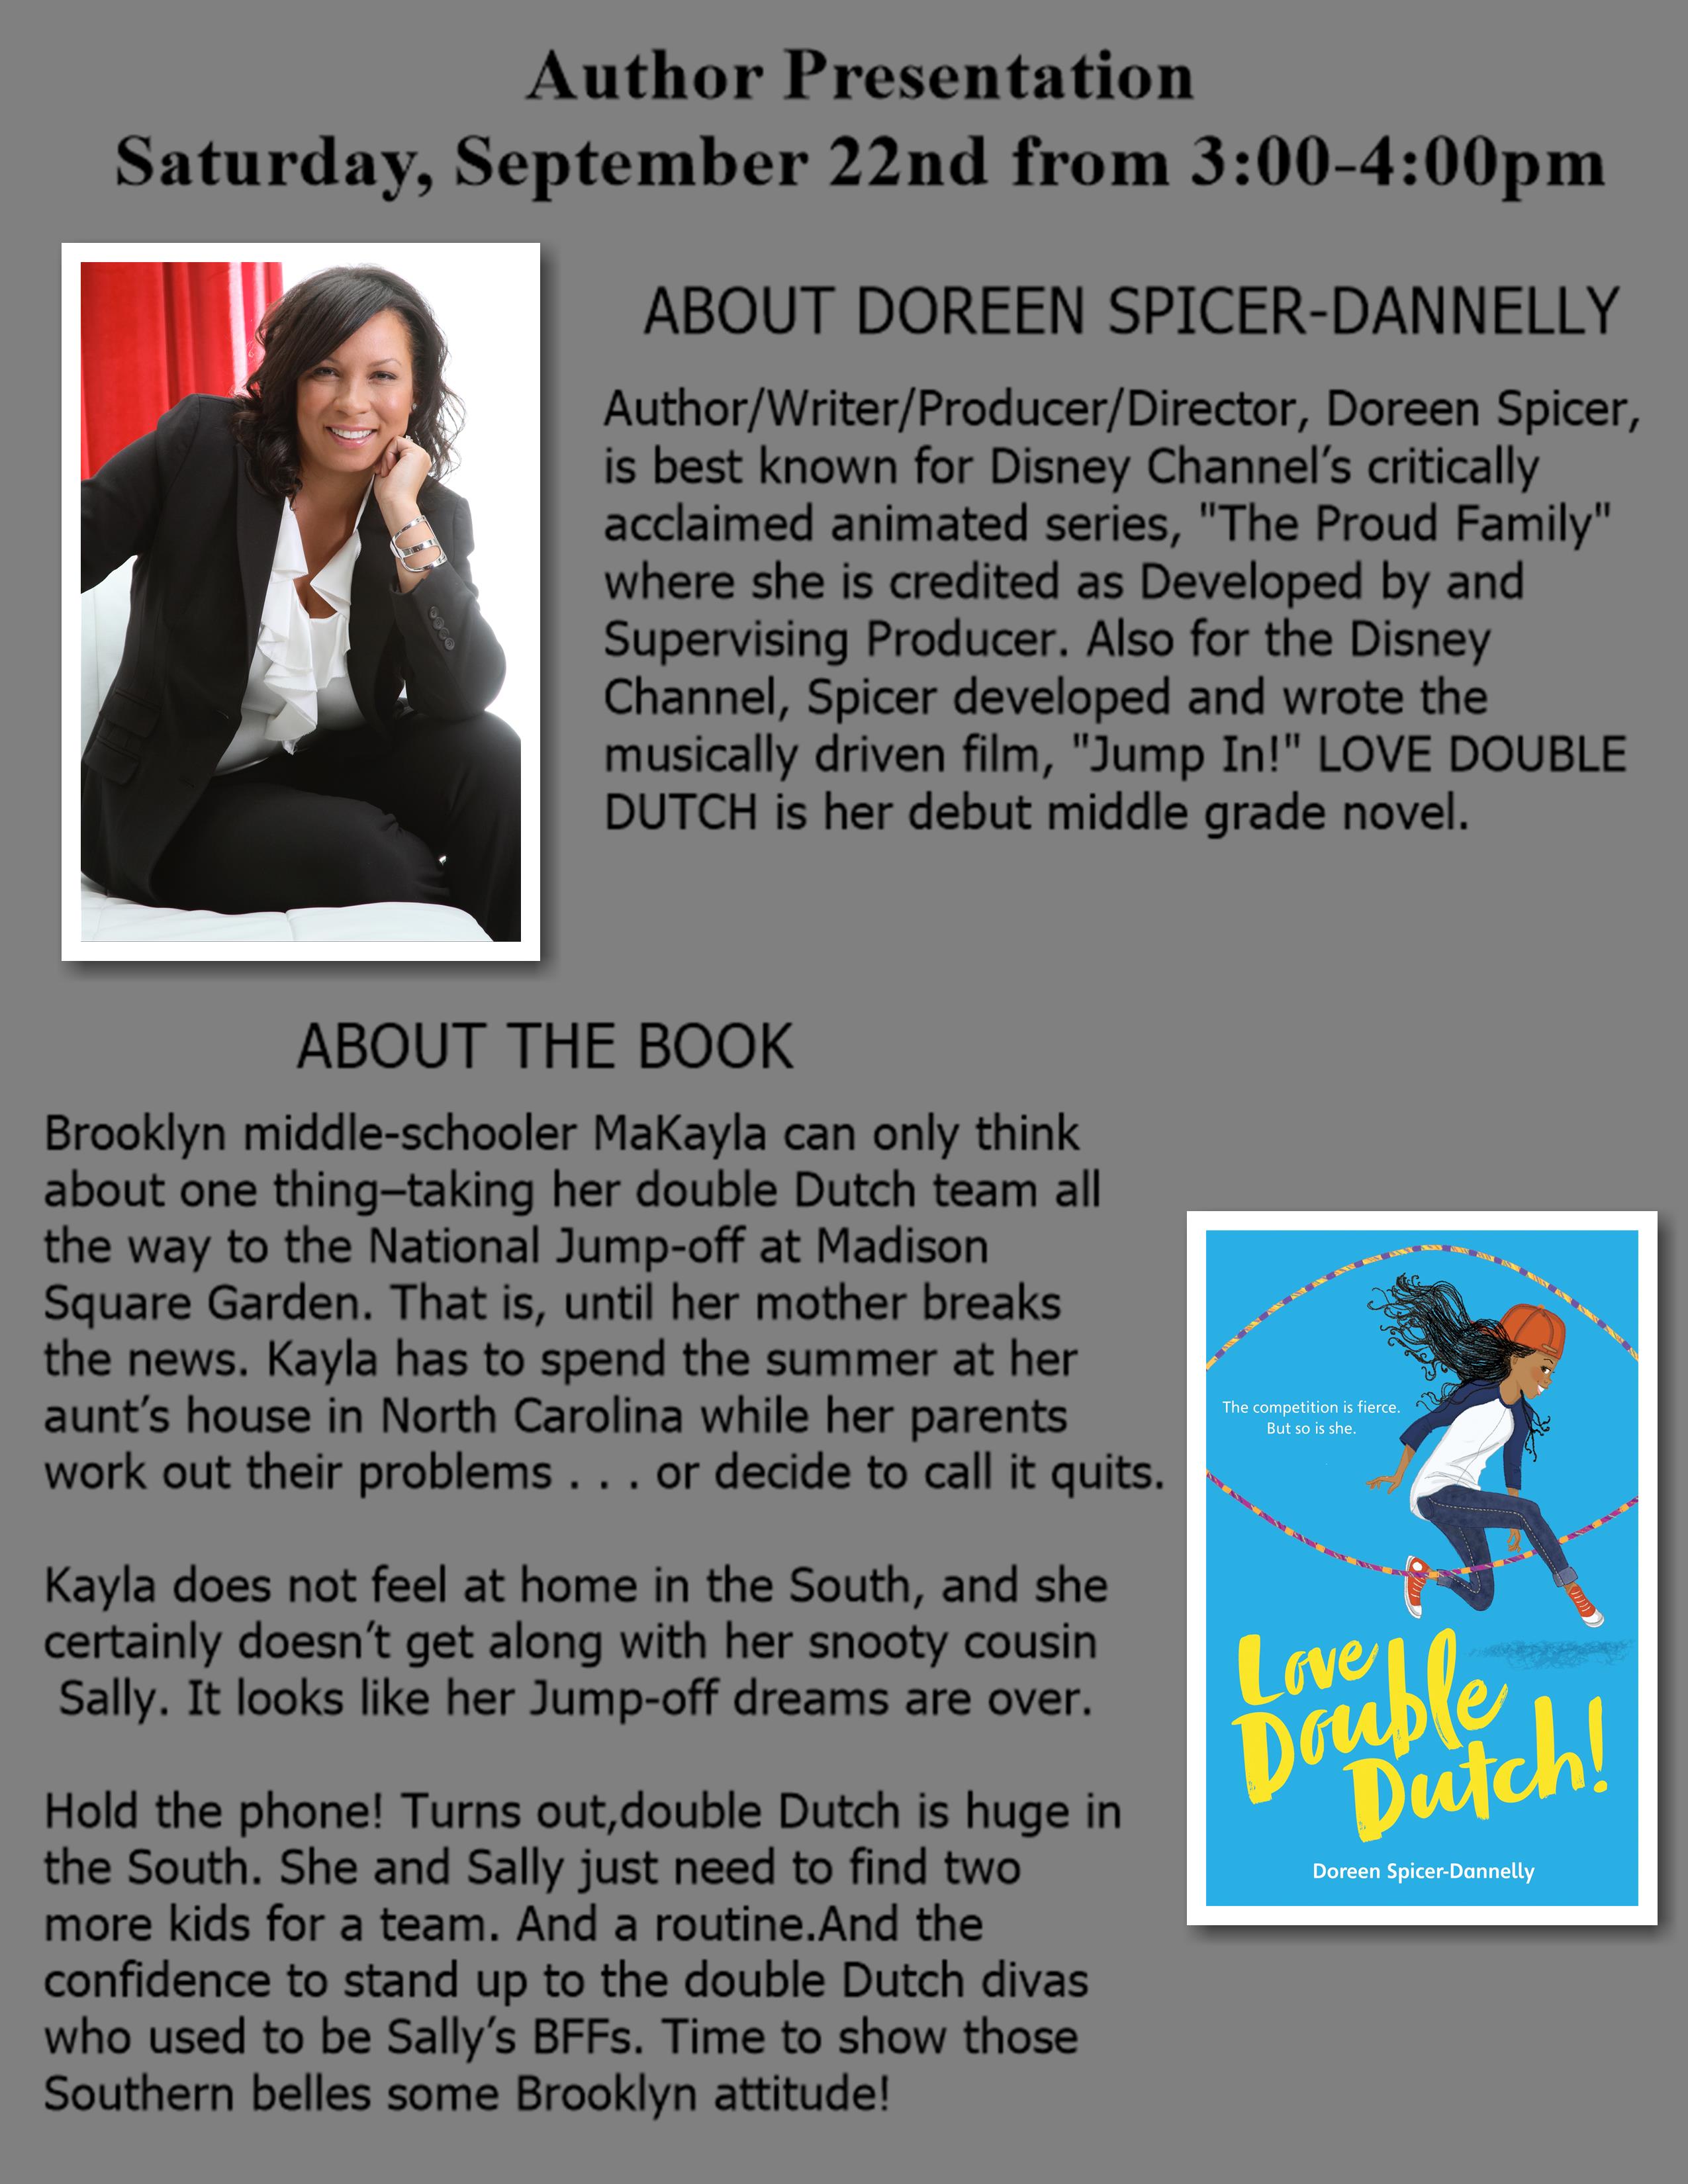 Doreen Spicer-Dannelly